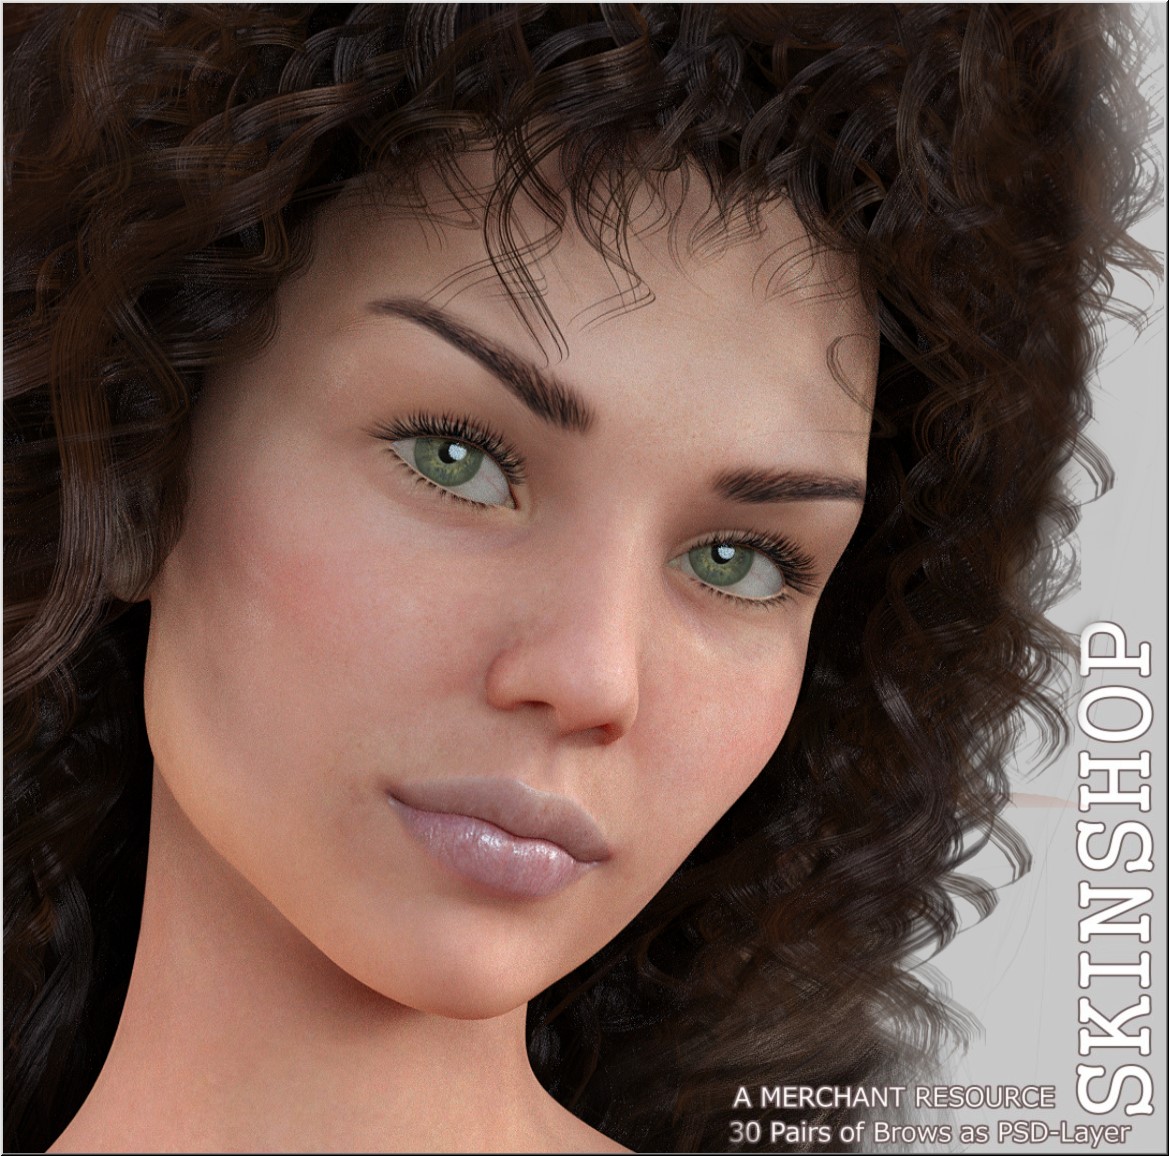 Skinshop - Eyebrows - Merchant Resource by: LUNA3D, 3D Models by Daz 3D